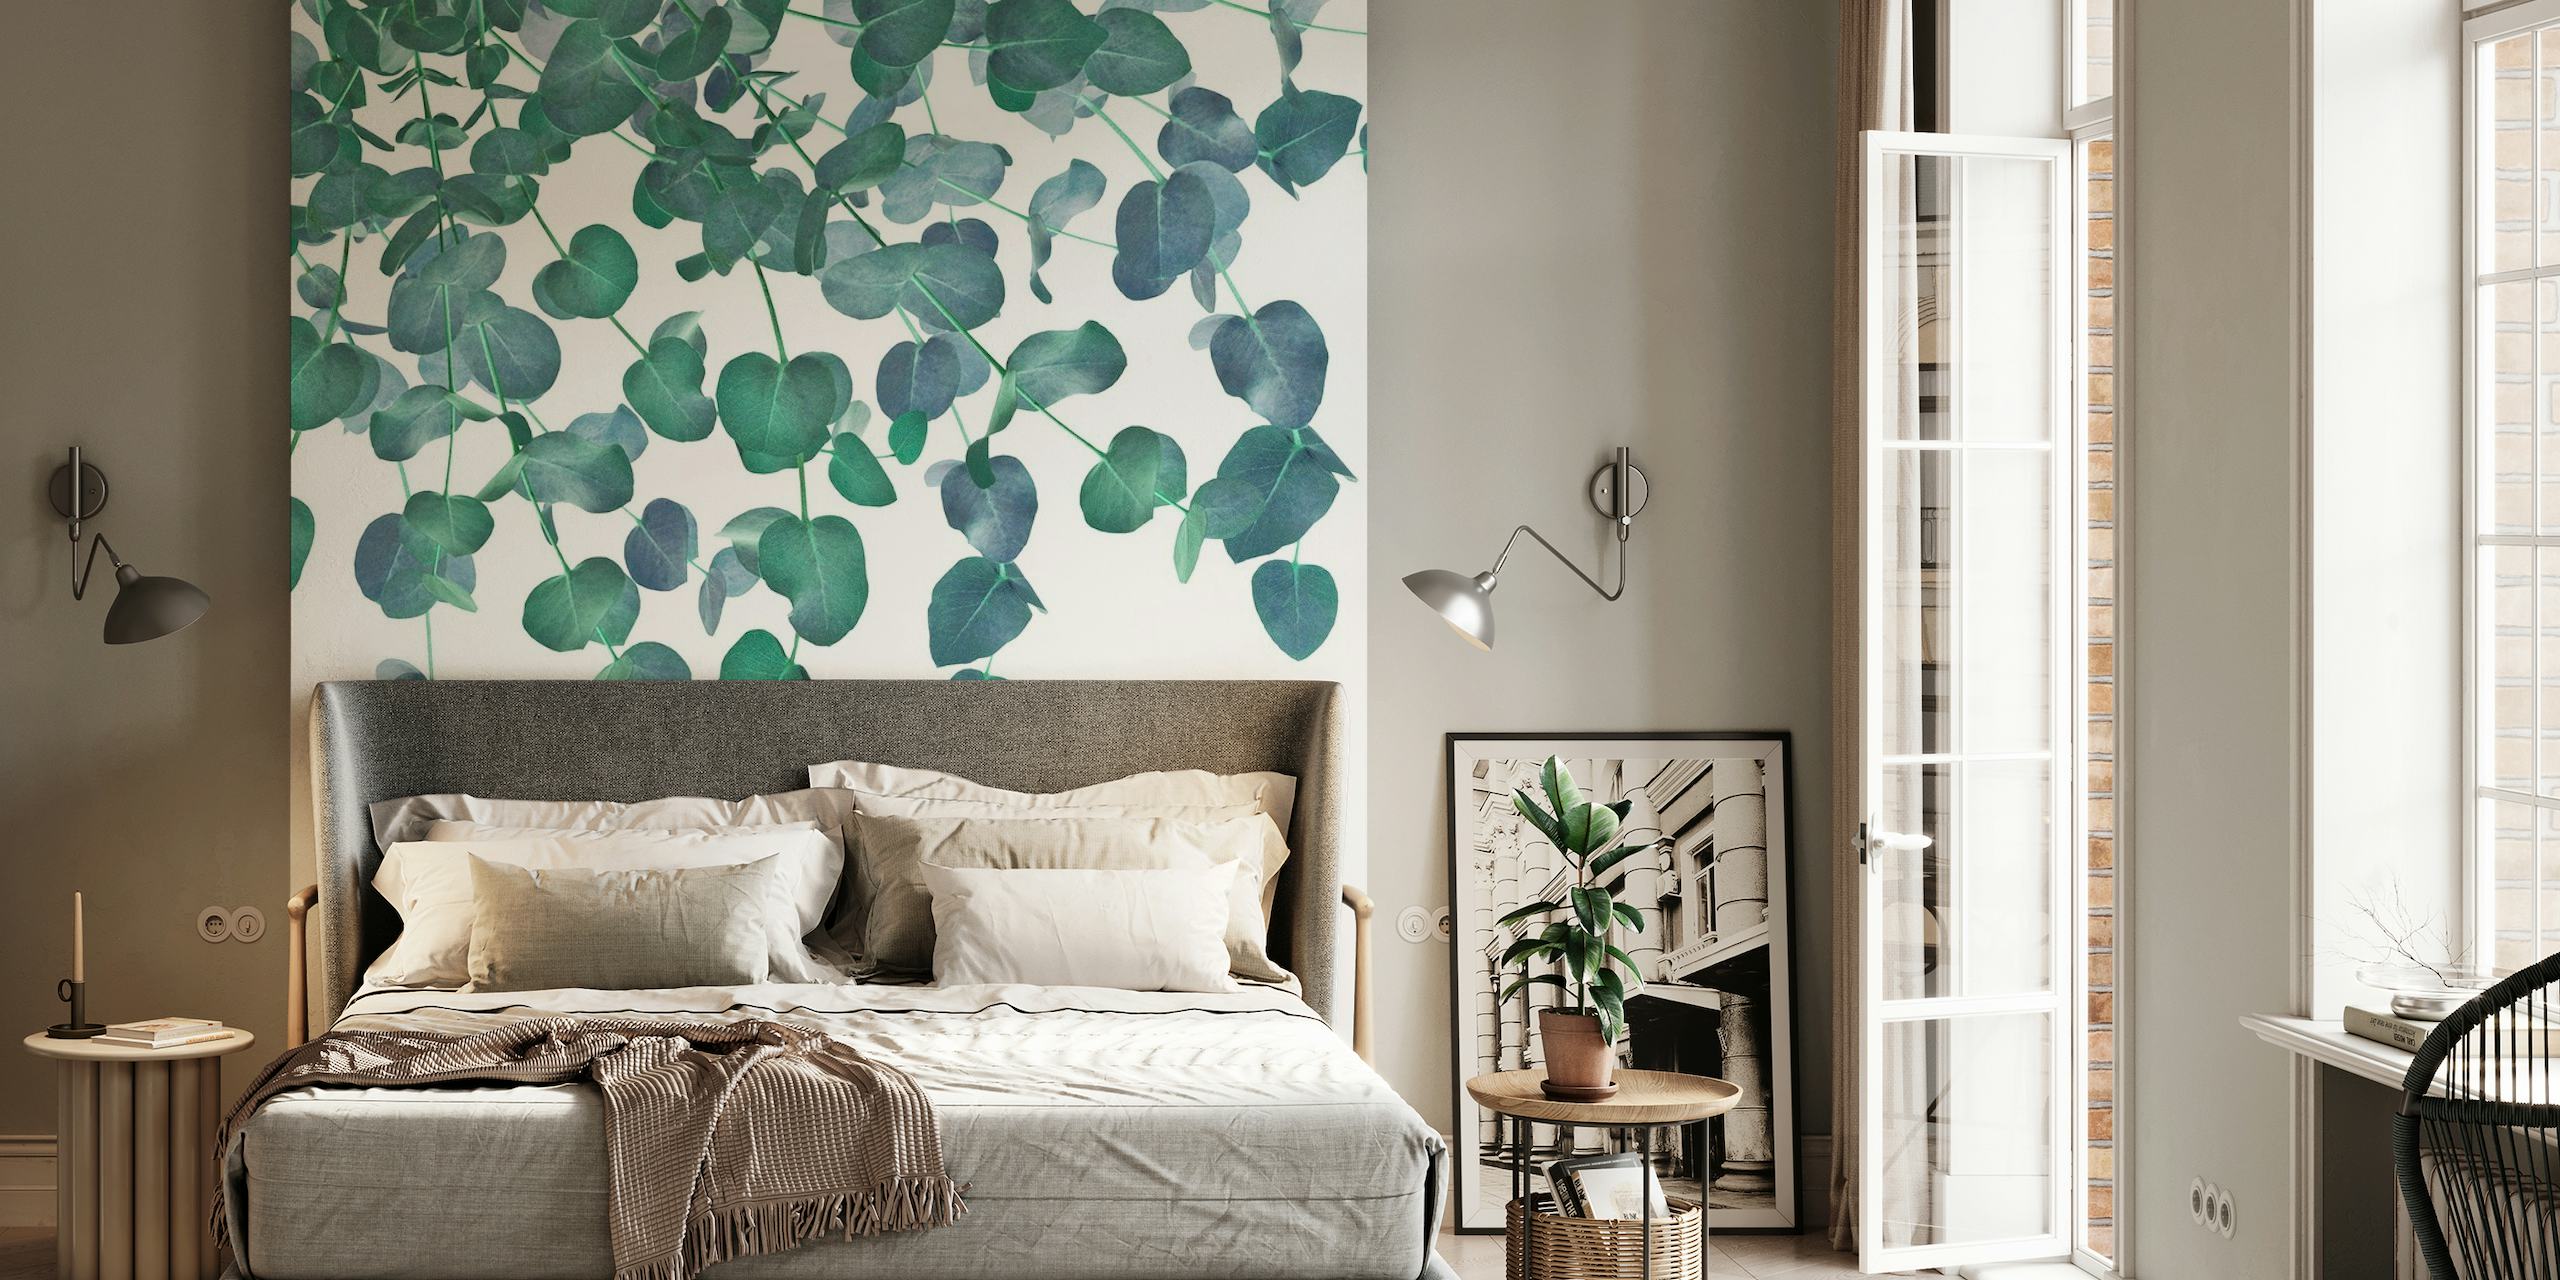 Eucalyptus leaves wall mural creating a serene backdrop